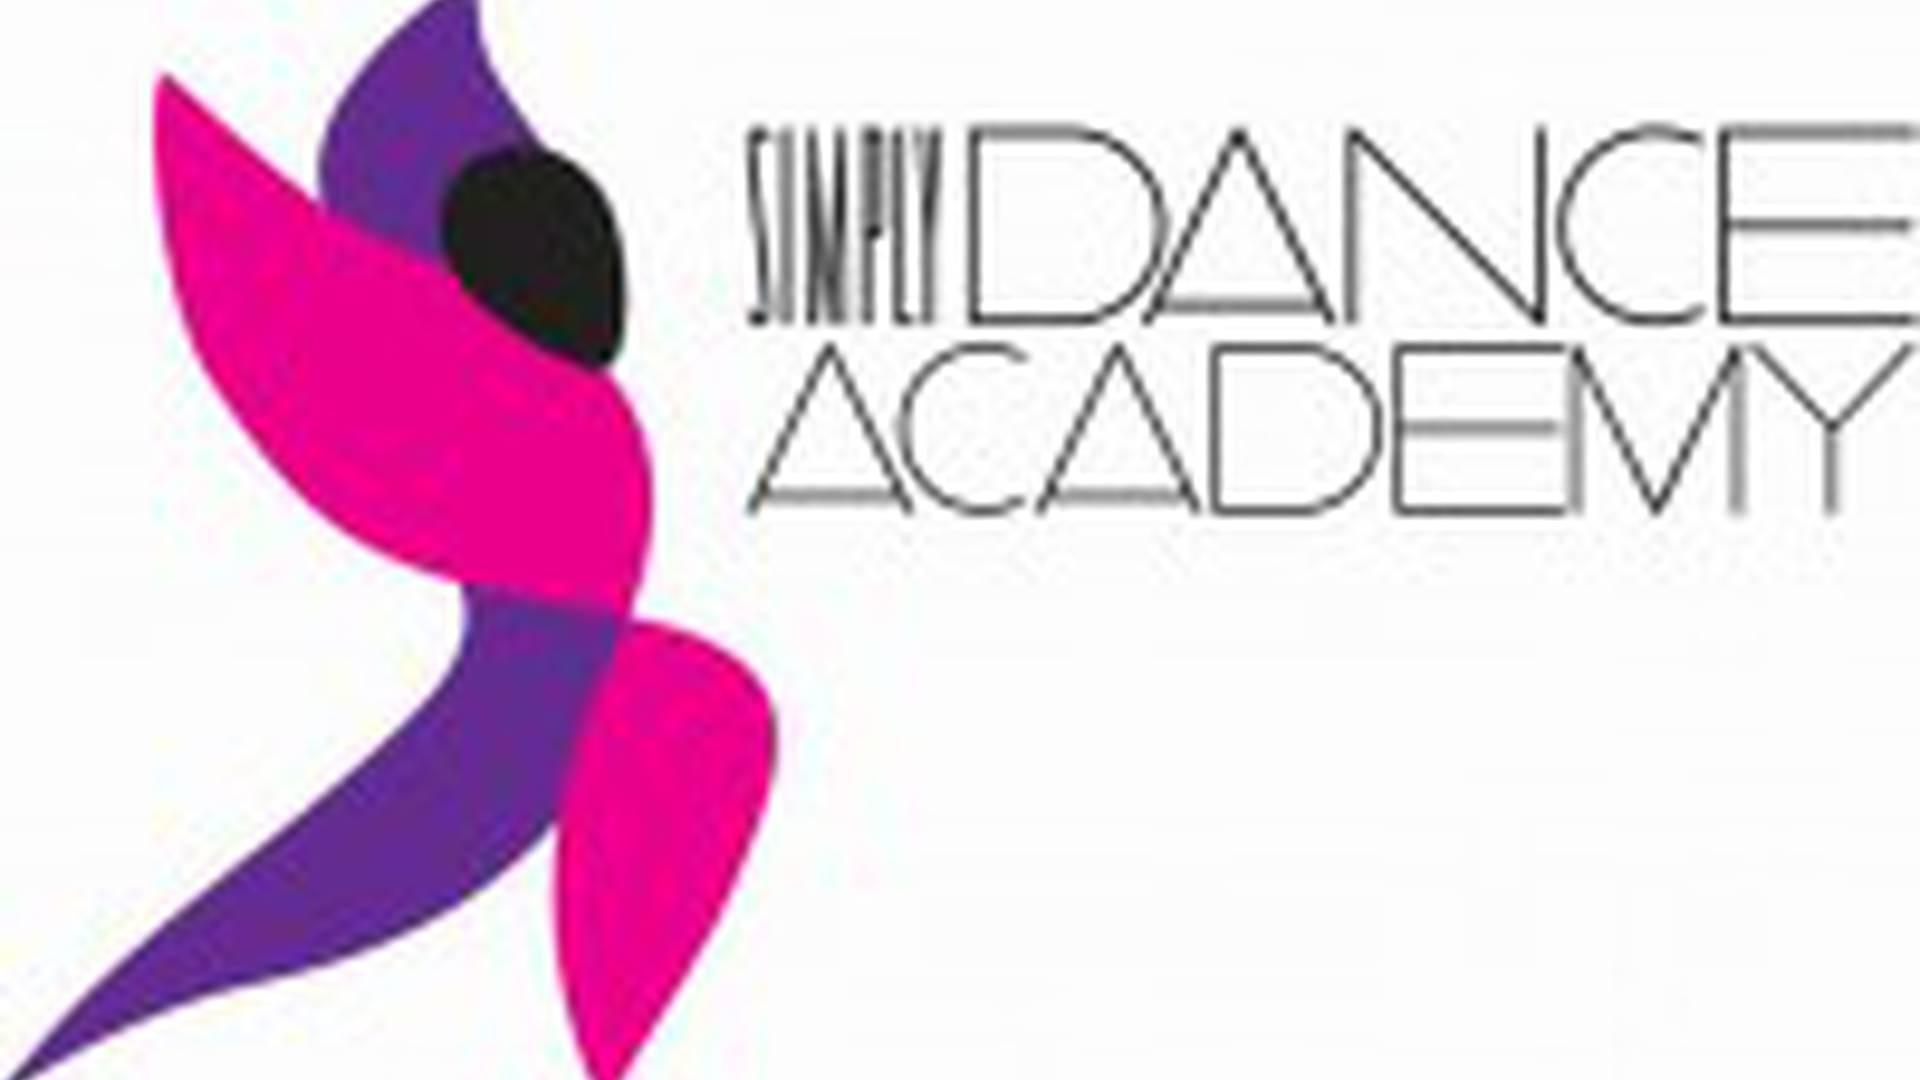 Simply Dance Academy photo